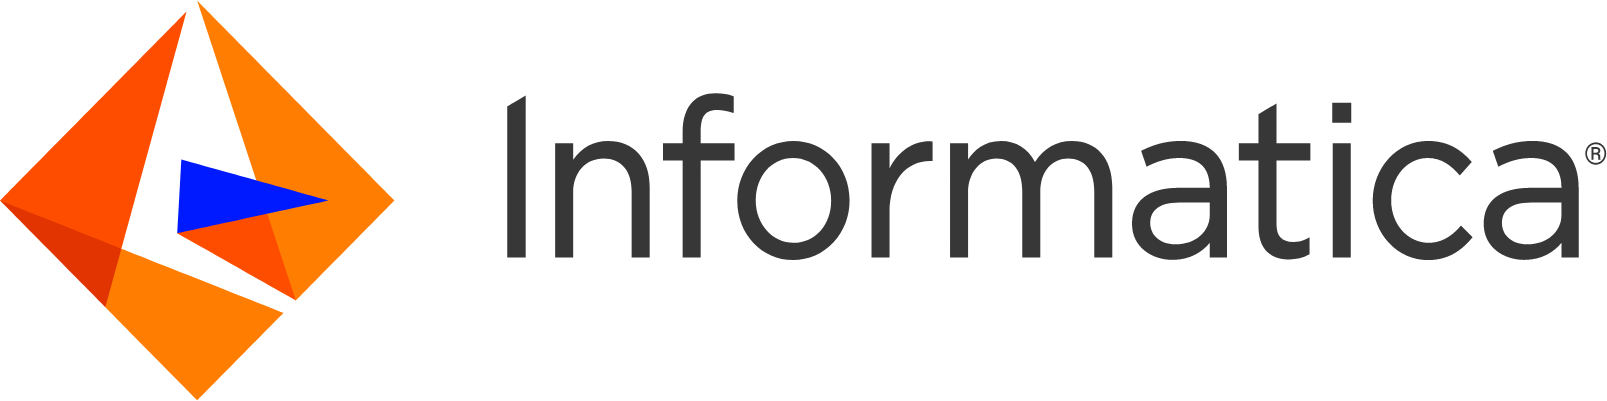 Informatica logo large (transparent PNG)